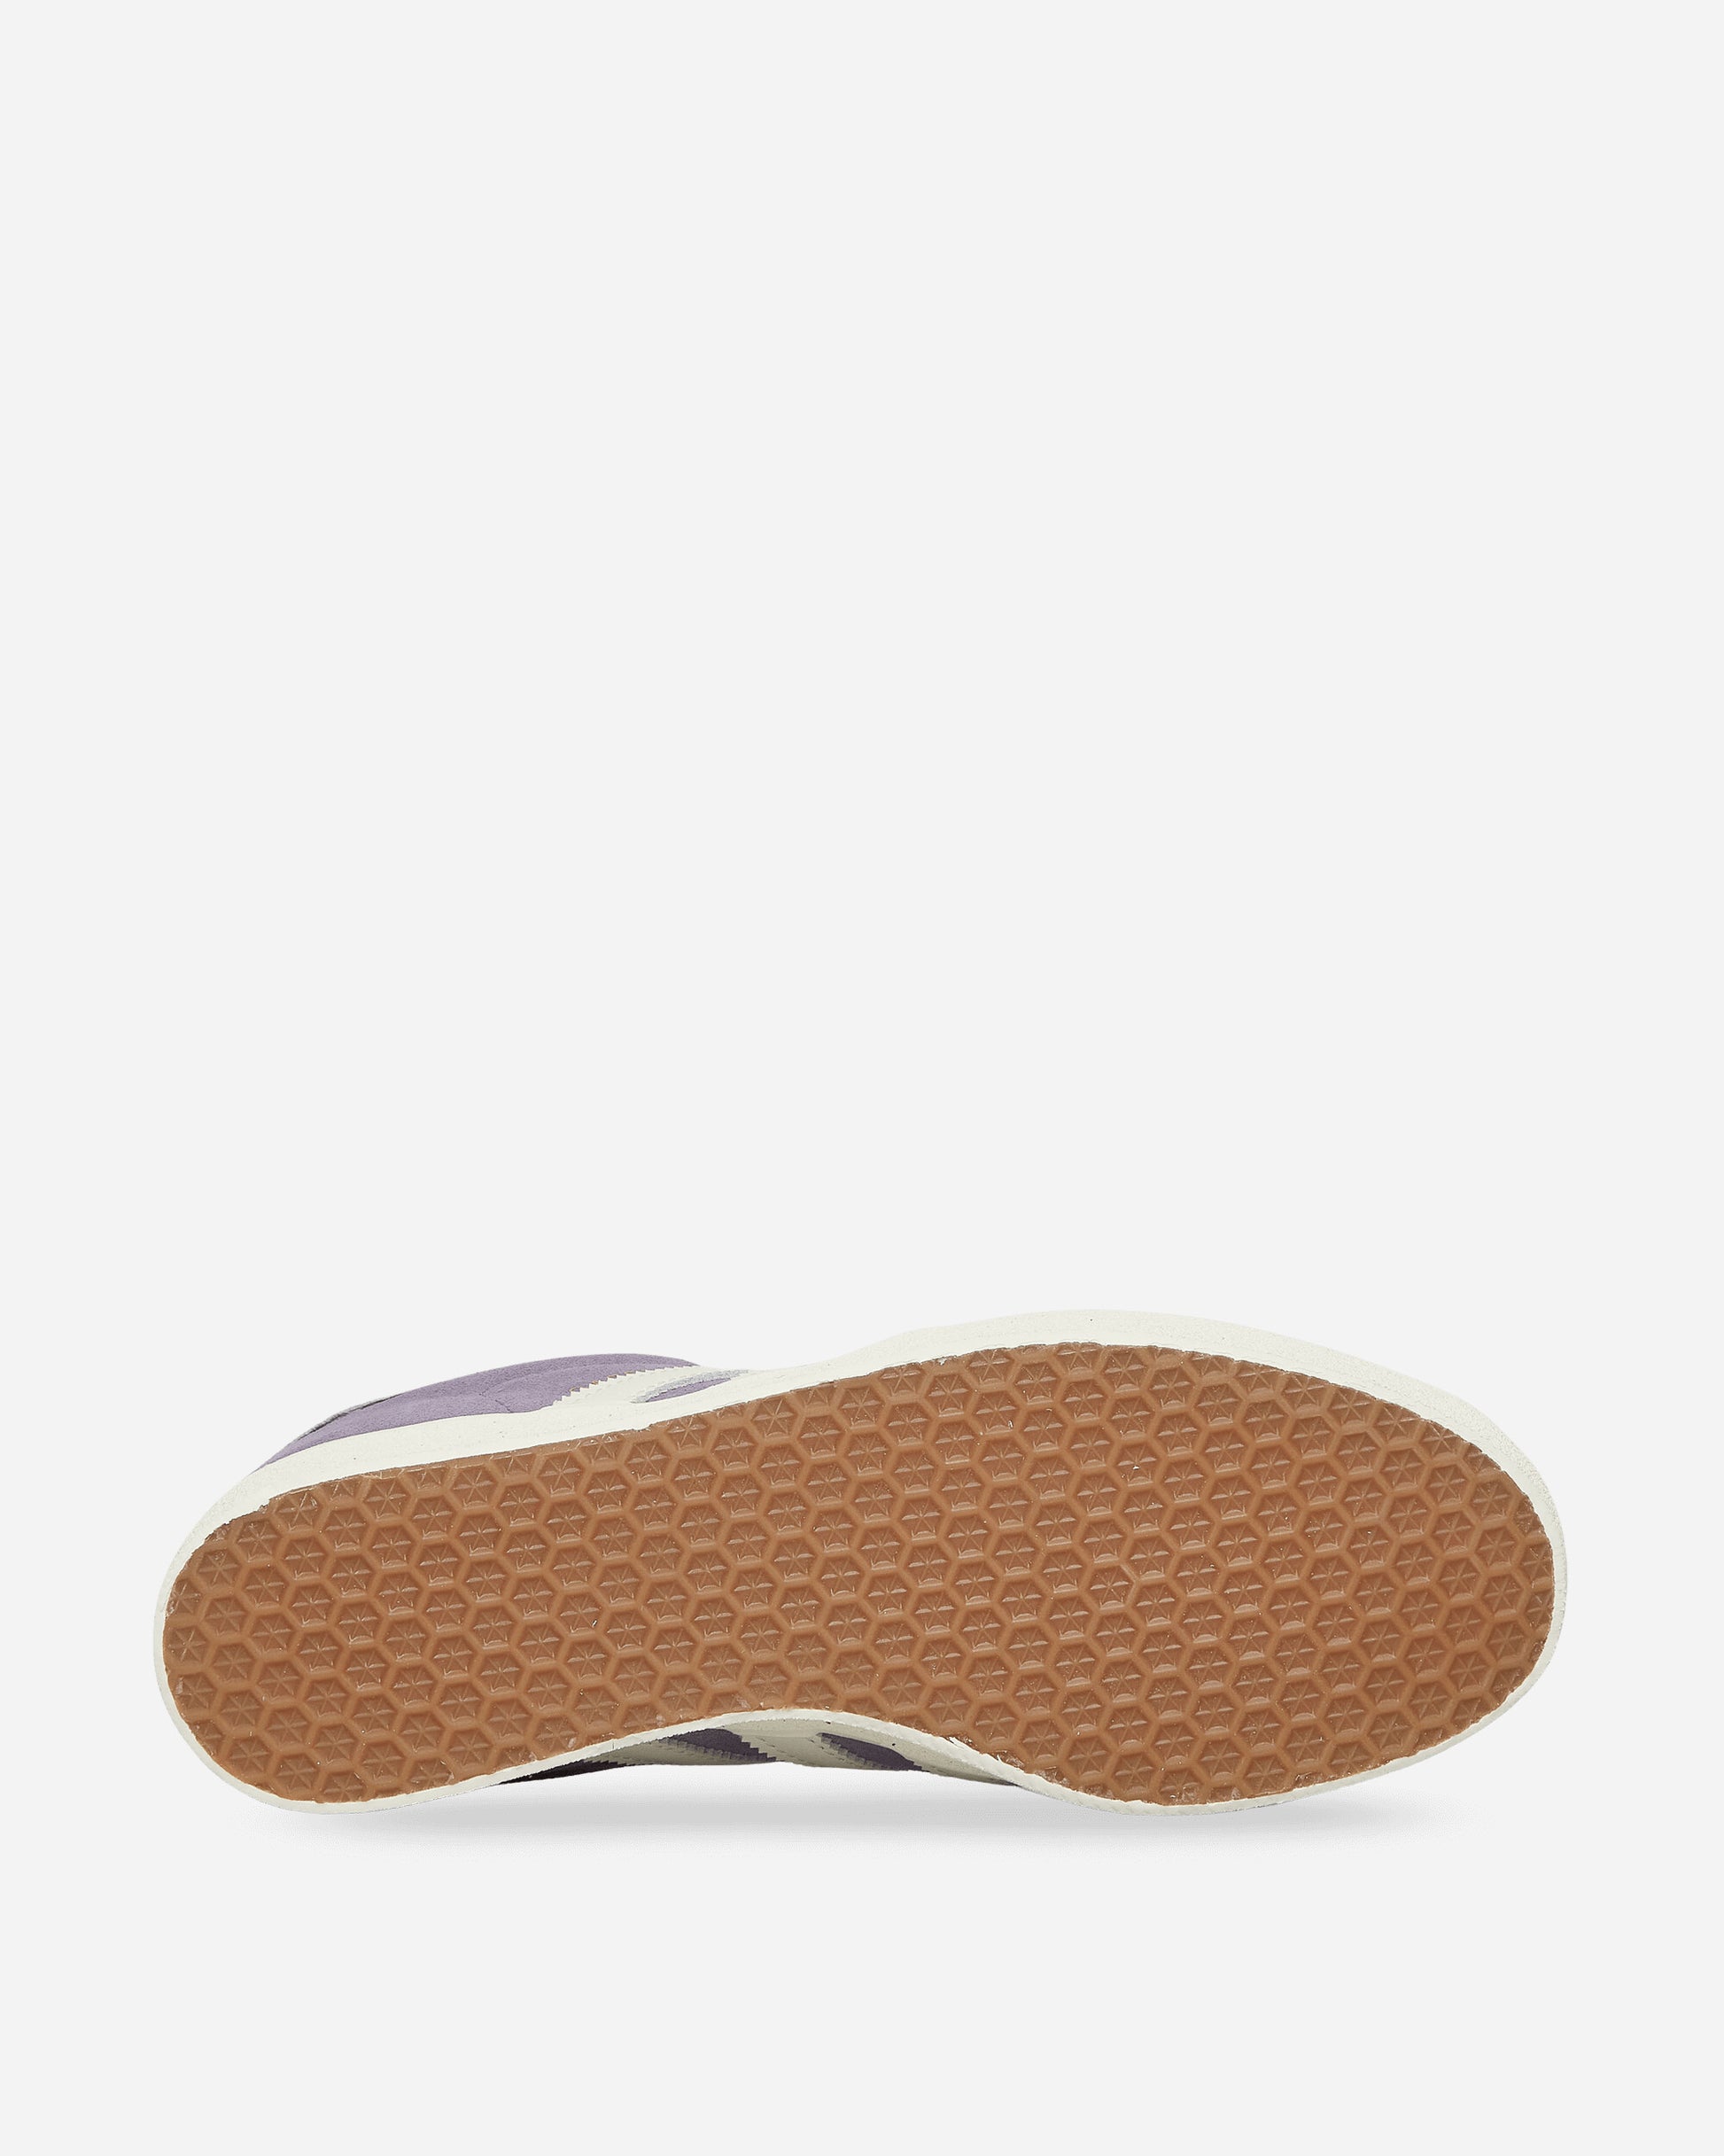 adidas Gazelle 85 Shadow Violet/Cloud White Sneakers Low IG6223 001